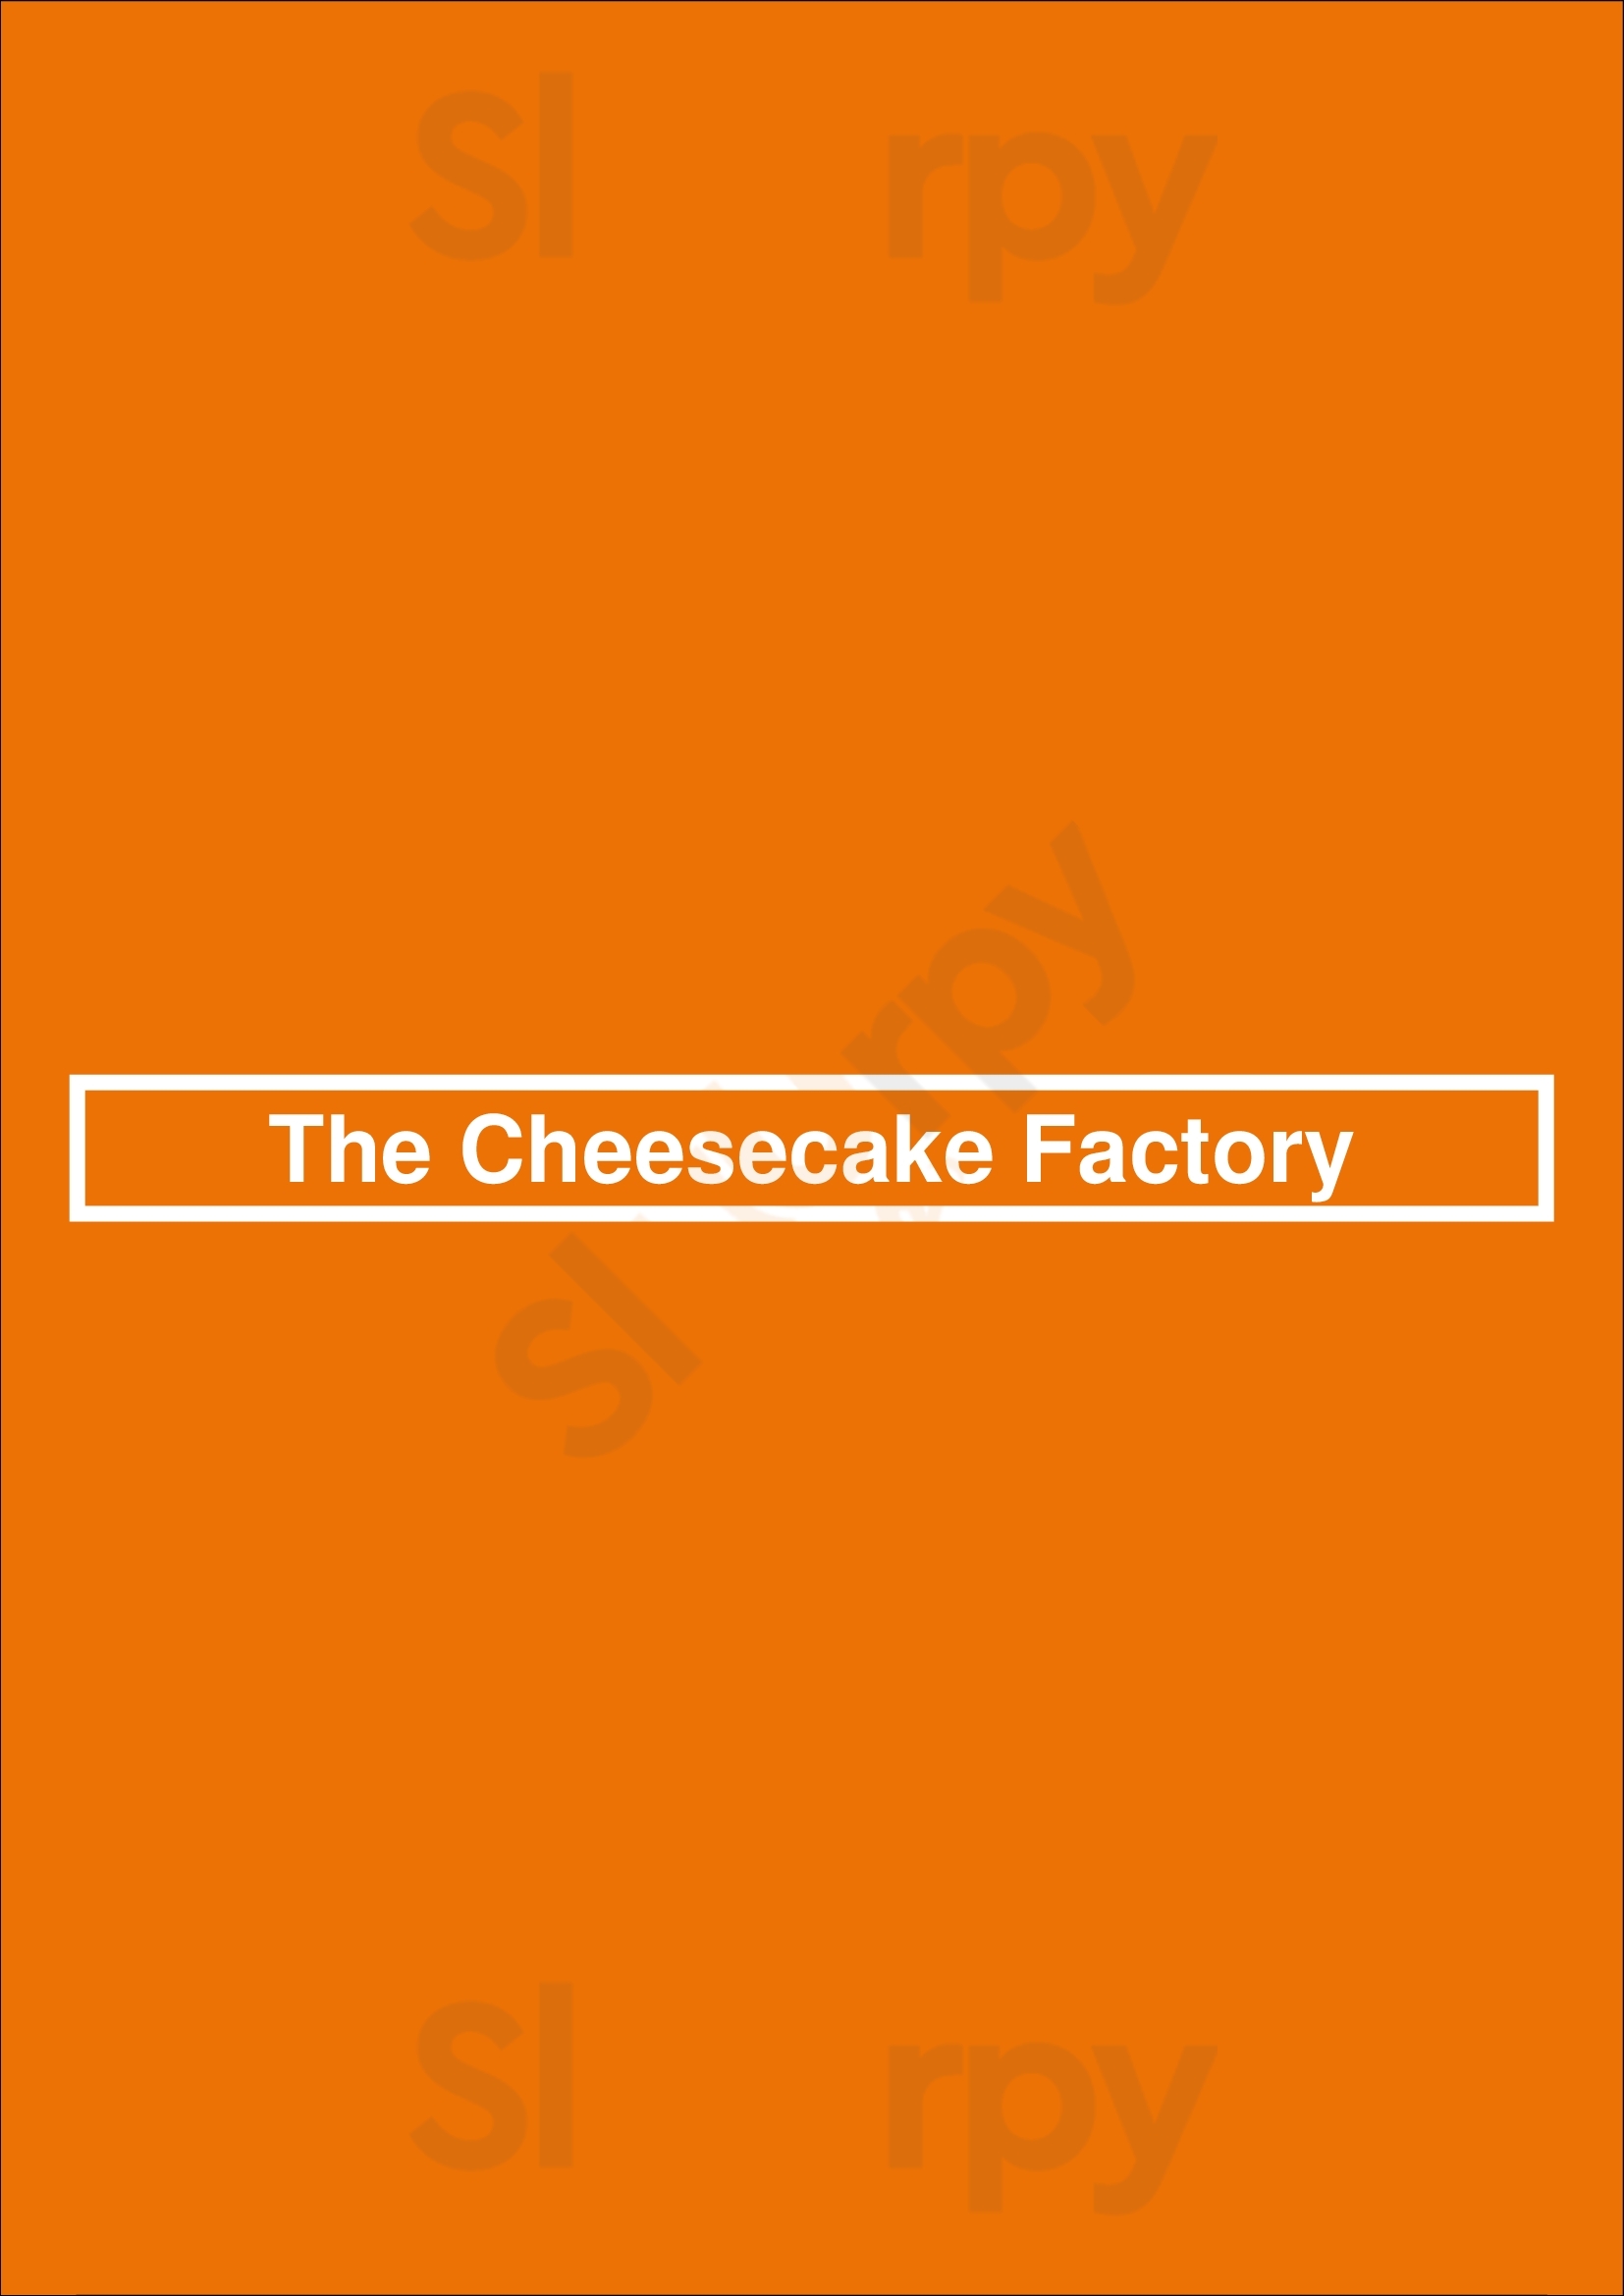 The Cheesecake Factory Atlanta Menu - 1